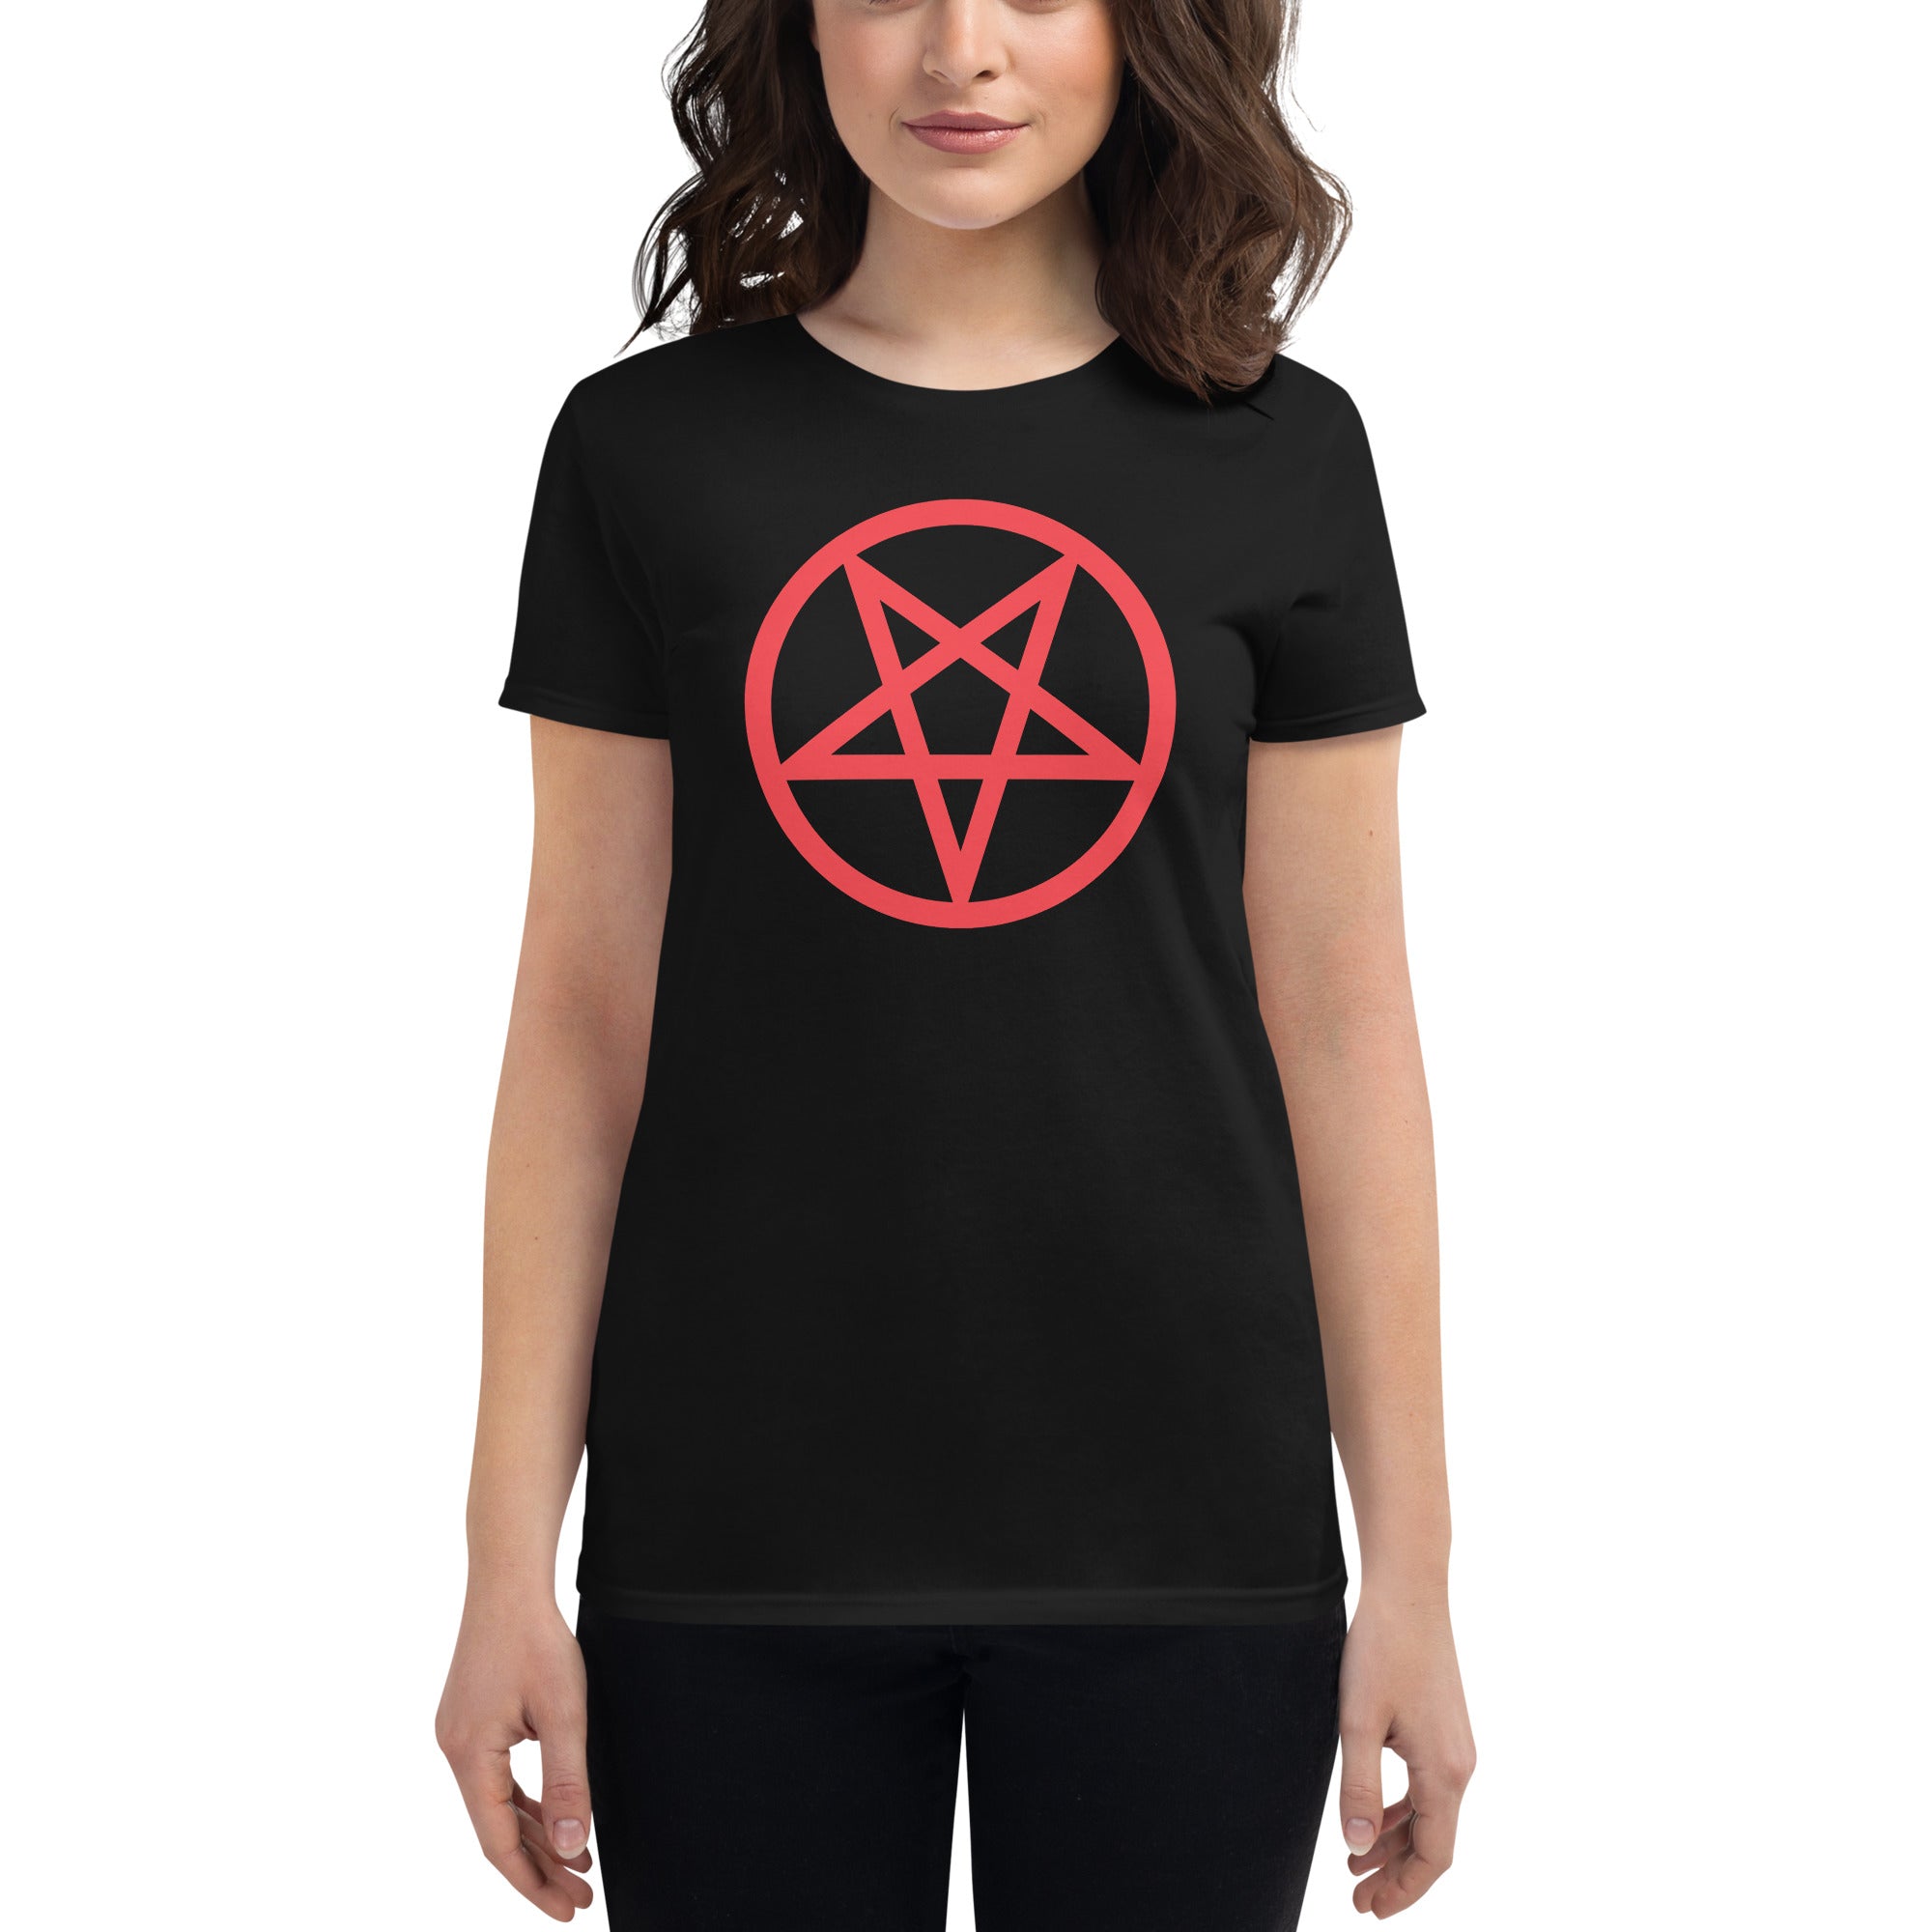 Red Classic Inverted Pentagram Occult Symbol Women's Short Sleeve Babydoll T-shirt